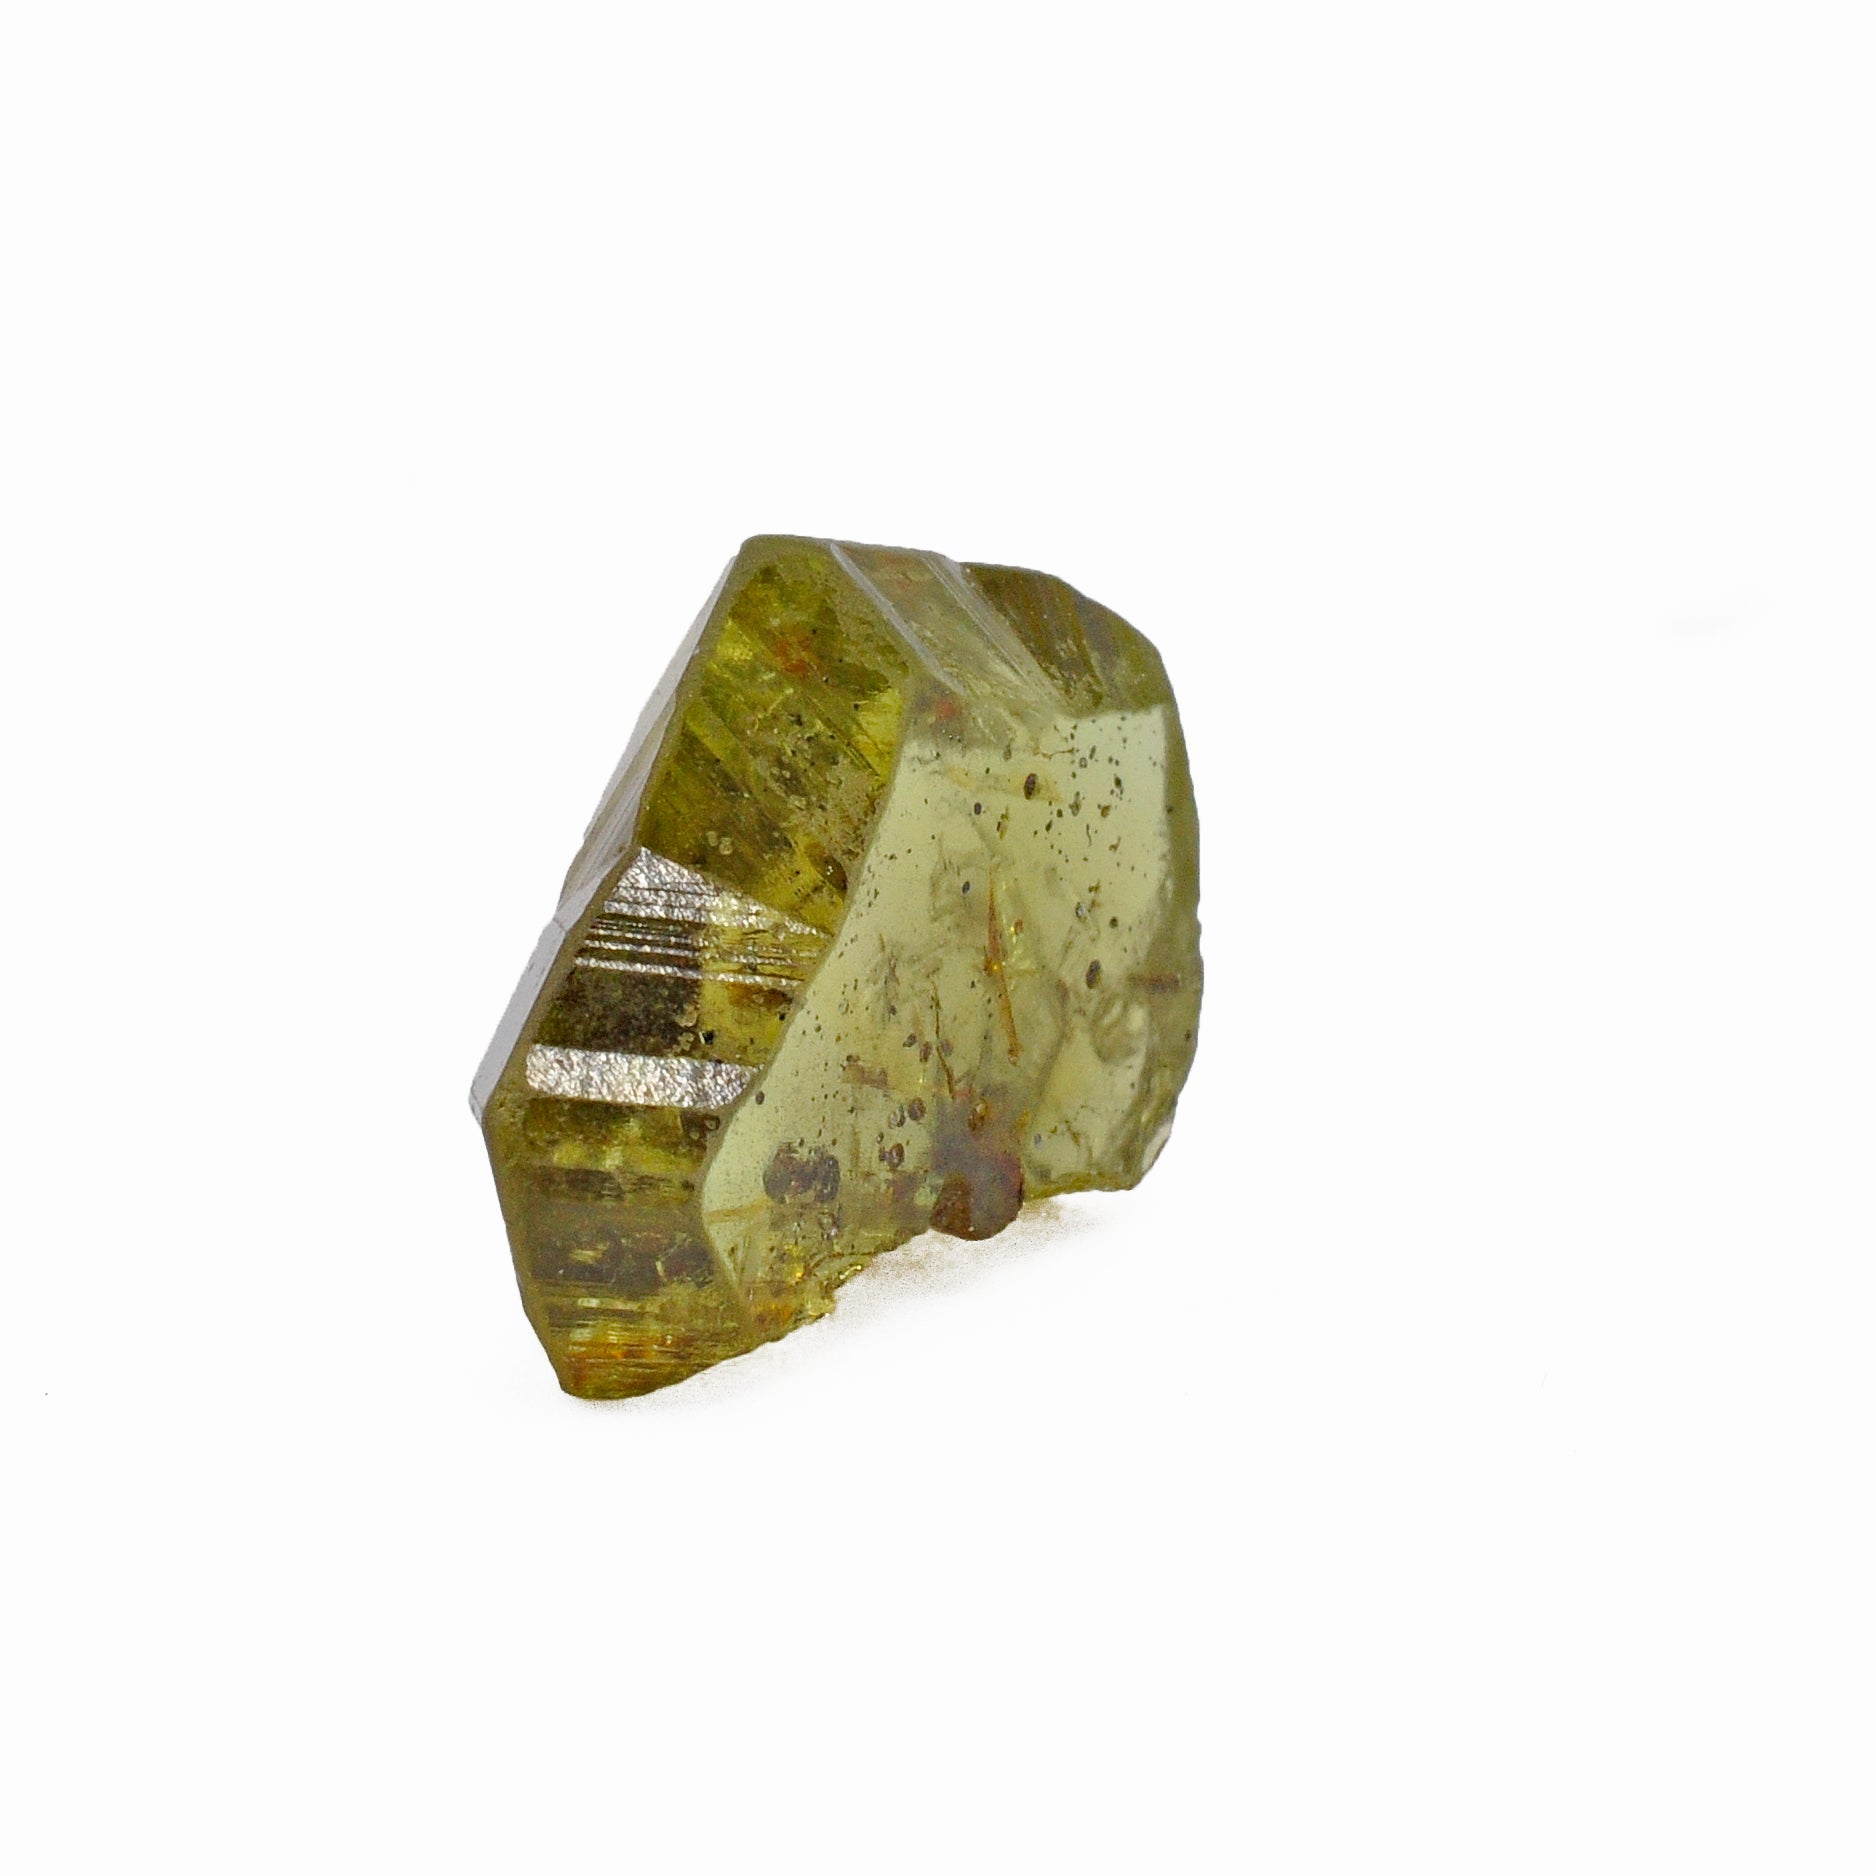 Chrysoberyl 17.5ct Natural Cats Eye "Sixling" Gem Crystal - Sri Lanka - CCX-244 - Crystalarium